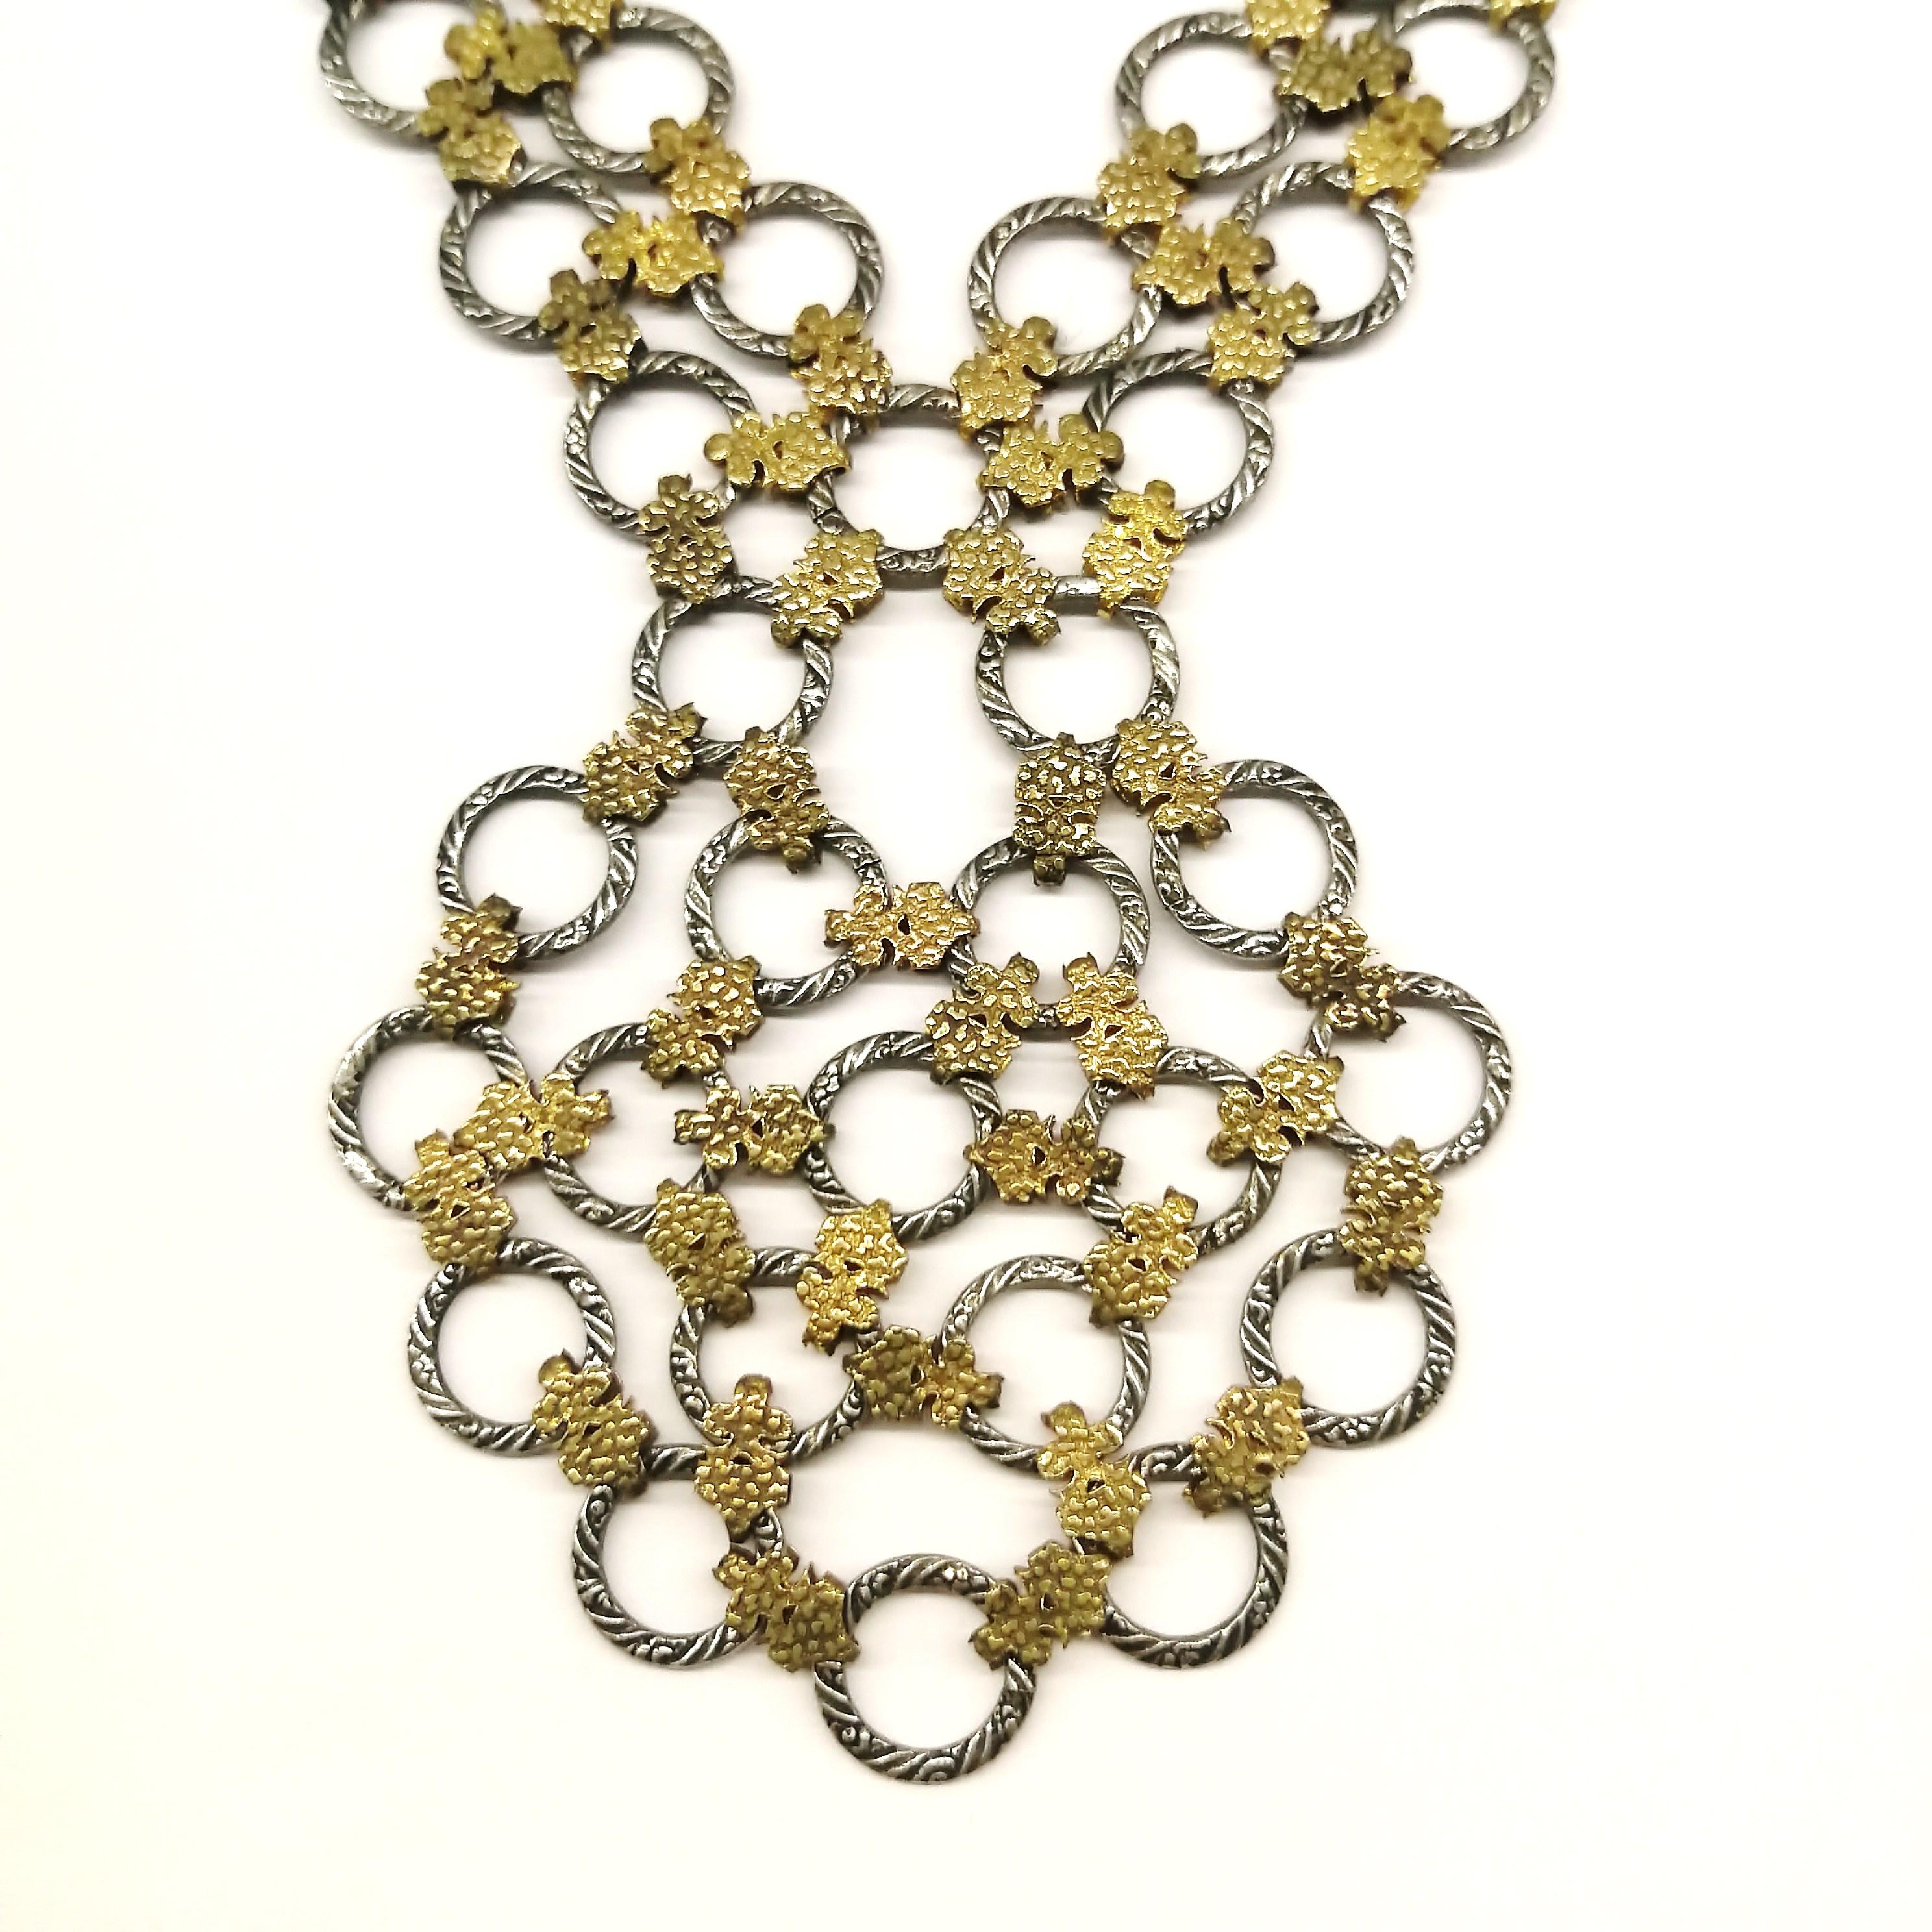 Baroque  A gilt and silvered metal 'sautoir' necklace, Francoise Montague, France, 1960s